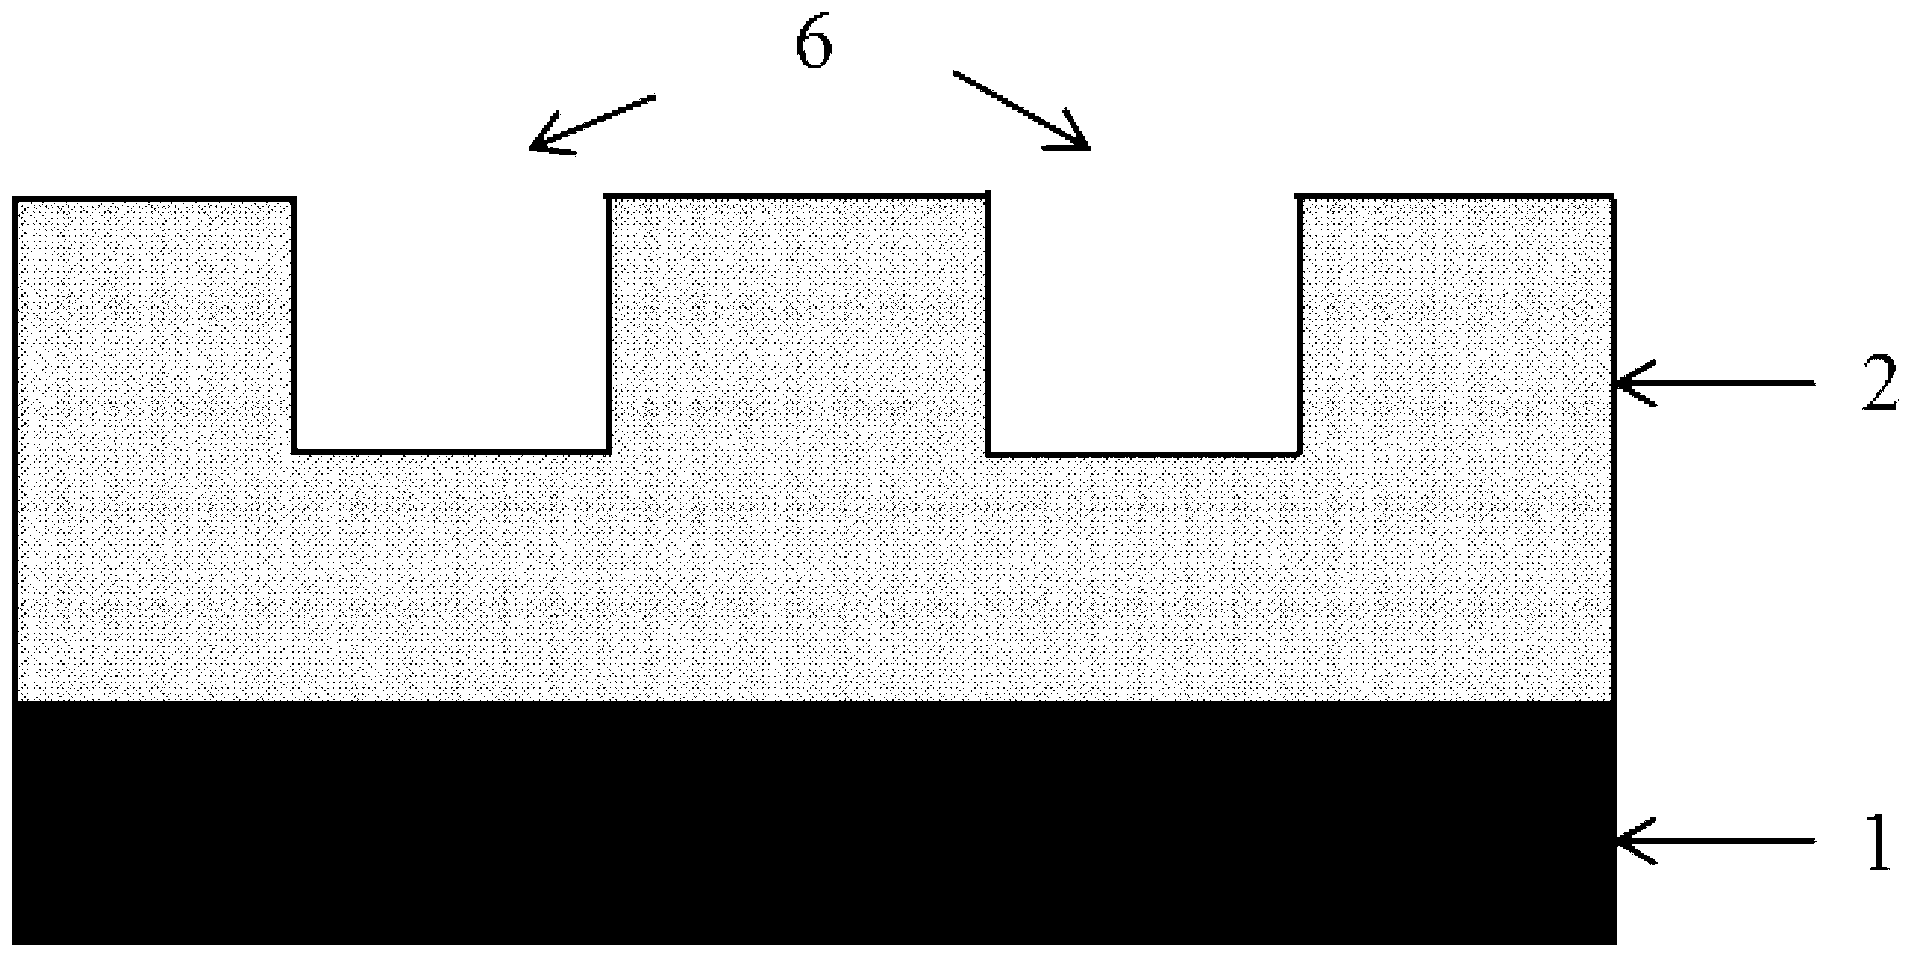 Groove-priority dual damascene copper interconnection method for reducing coupling capacitance of redundant metal